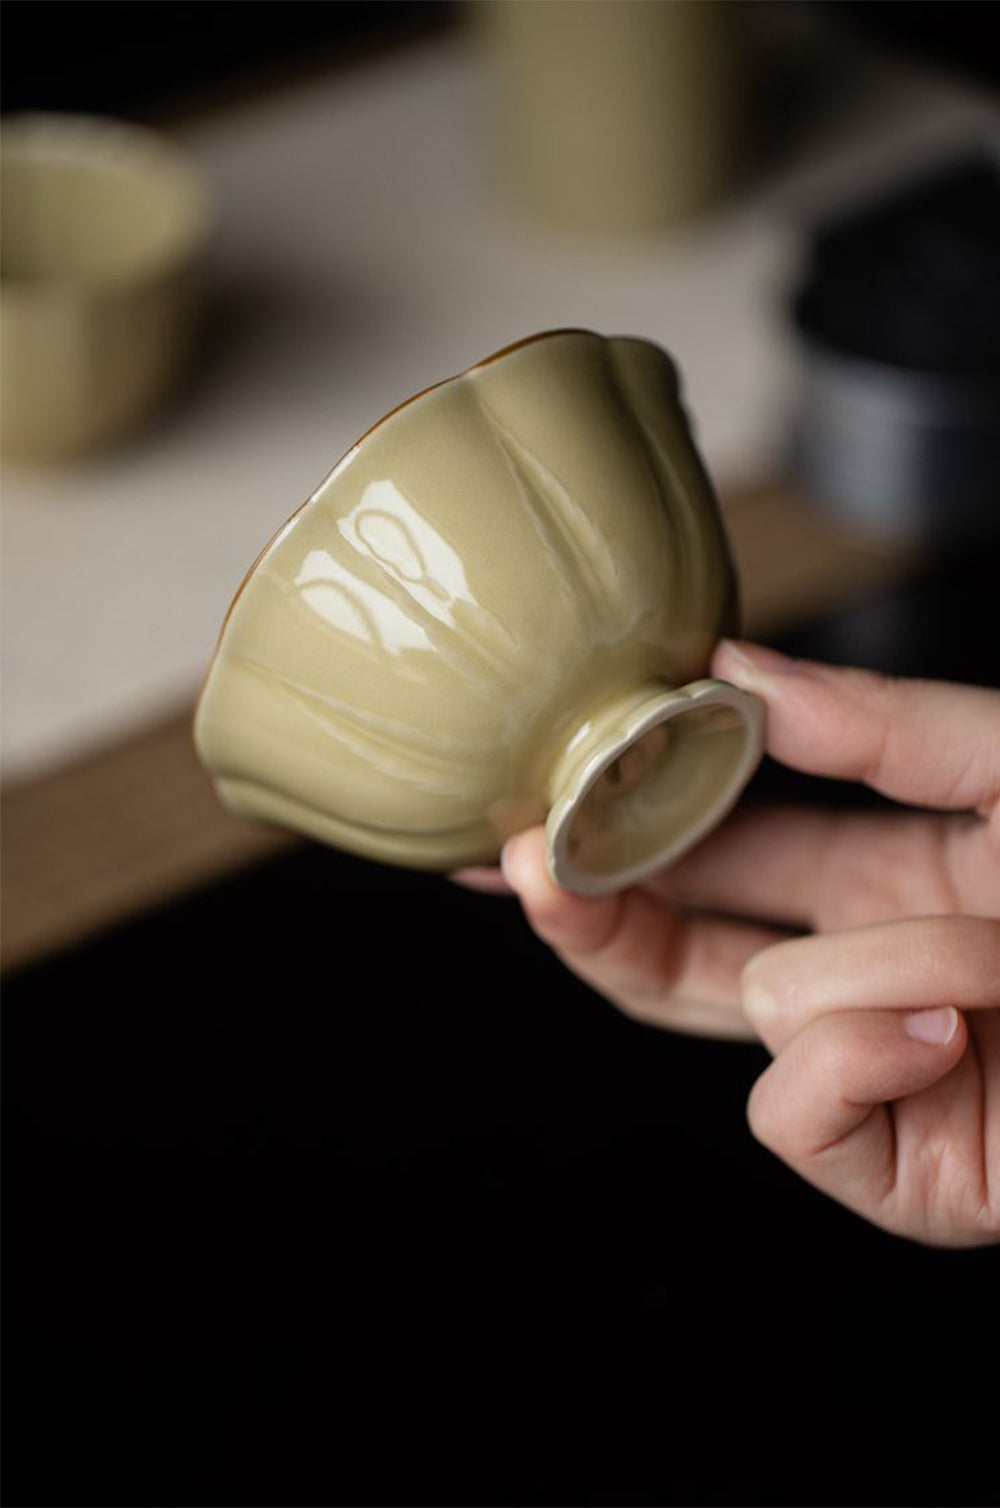 IwaiLoft 茶杯 湯のみ 湯呑み お茶 カップ コップ グラス 陶磁器 来客用 お茶用品 ティーウェア 中国茶器 台湾茶器 贈り物にも – 茶器・コーヒー用品を選ぶ  - IwaiLoft